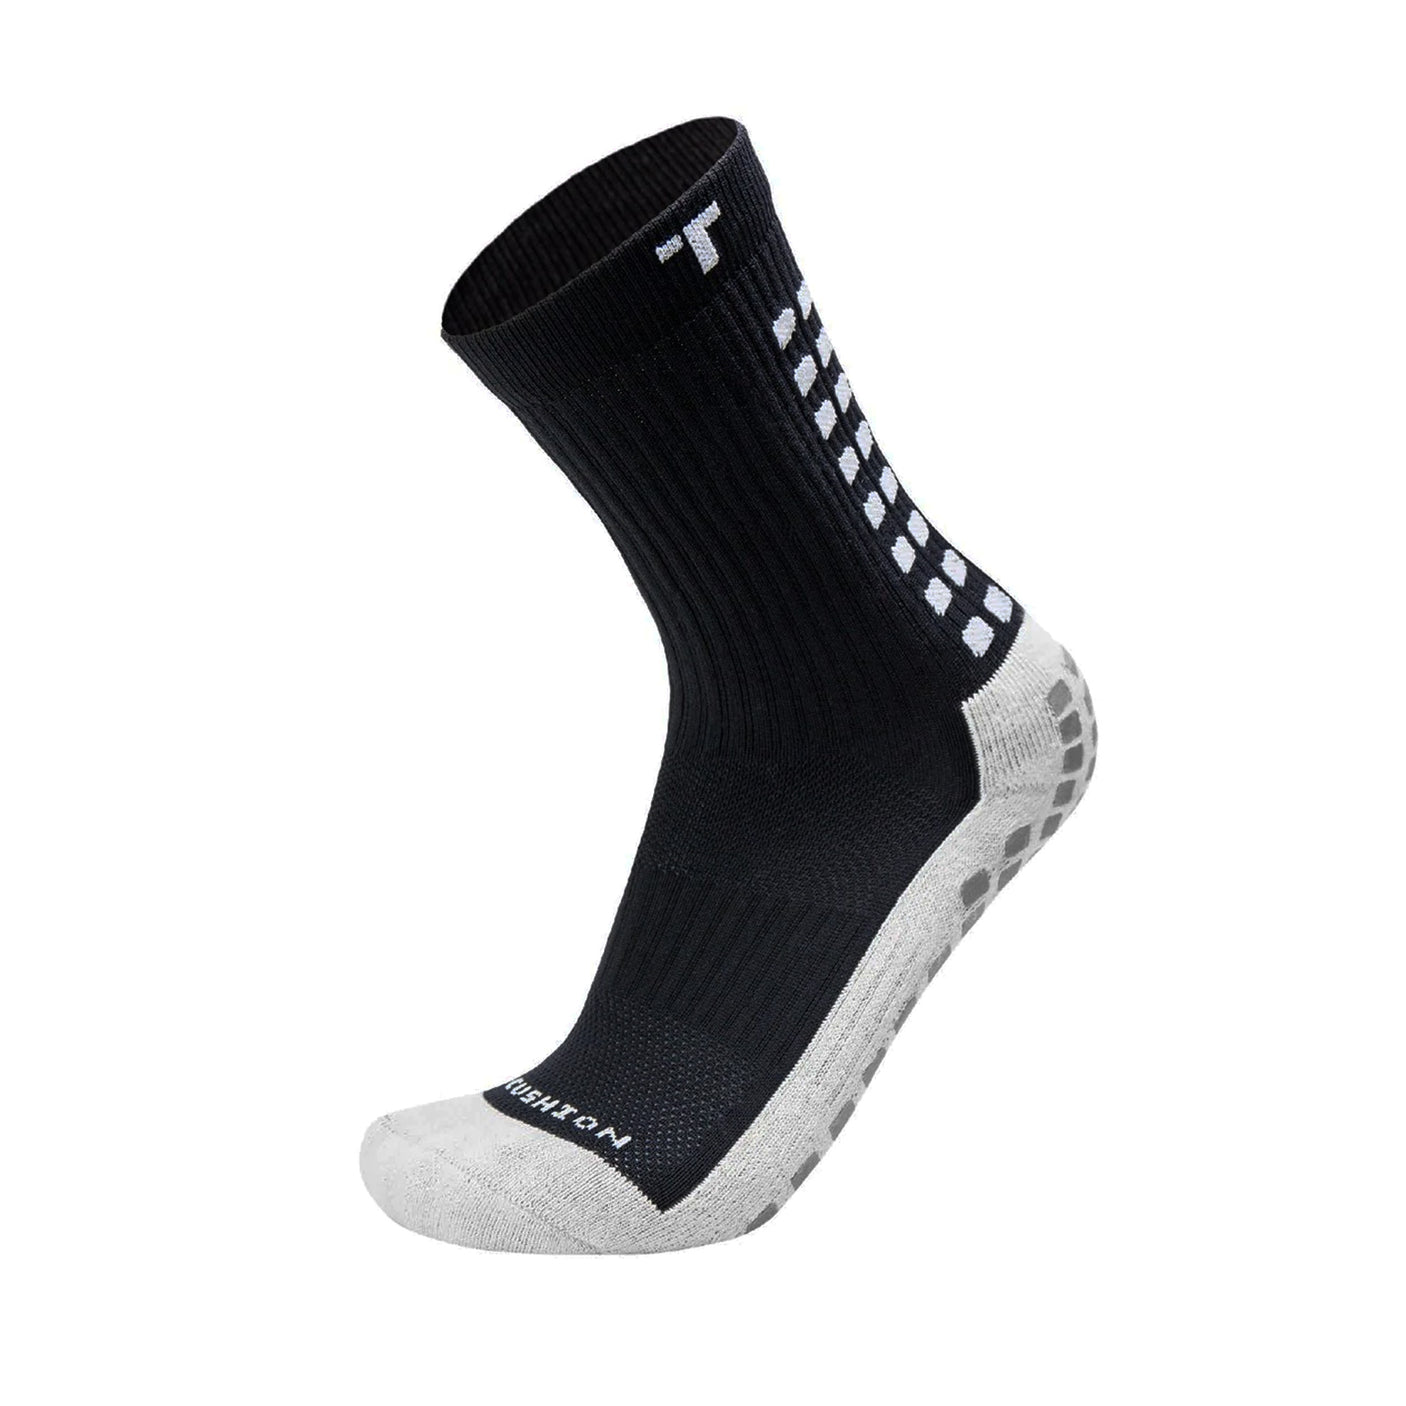 TRUsox 3.0 Mid-Calf Cushioned Grip Socks Black/White